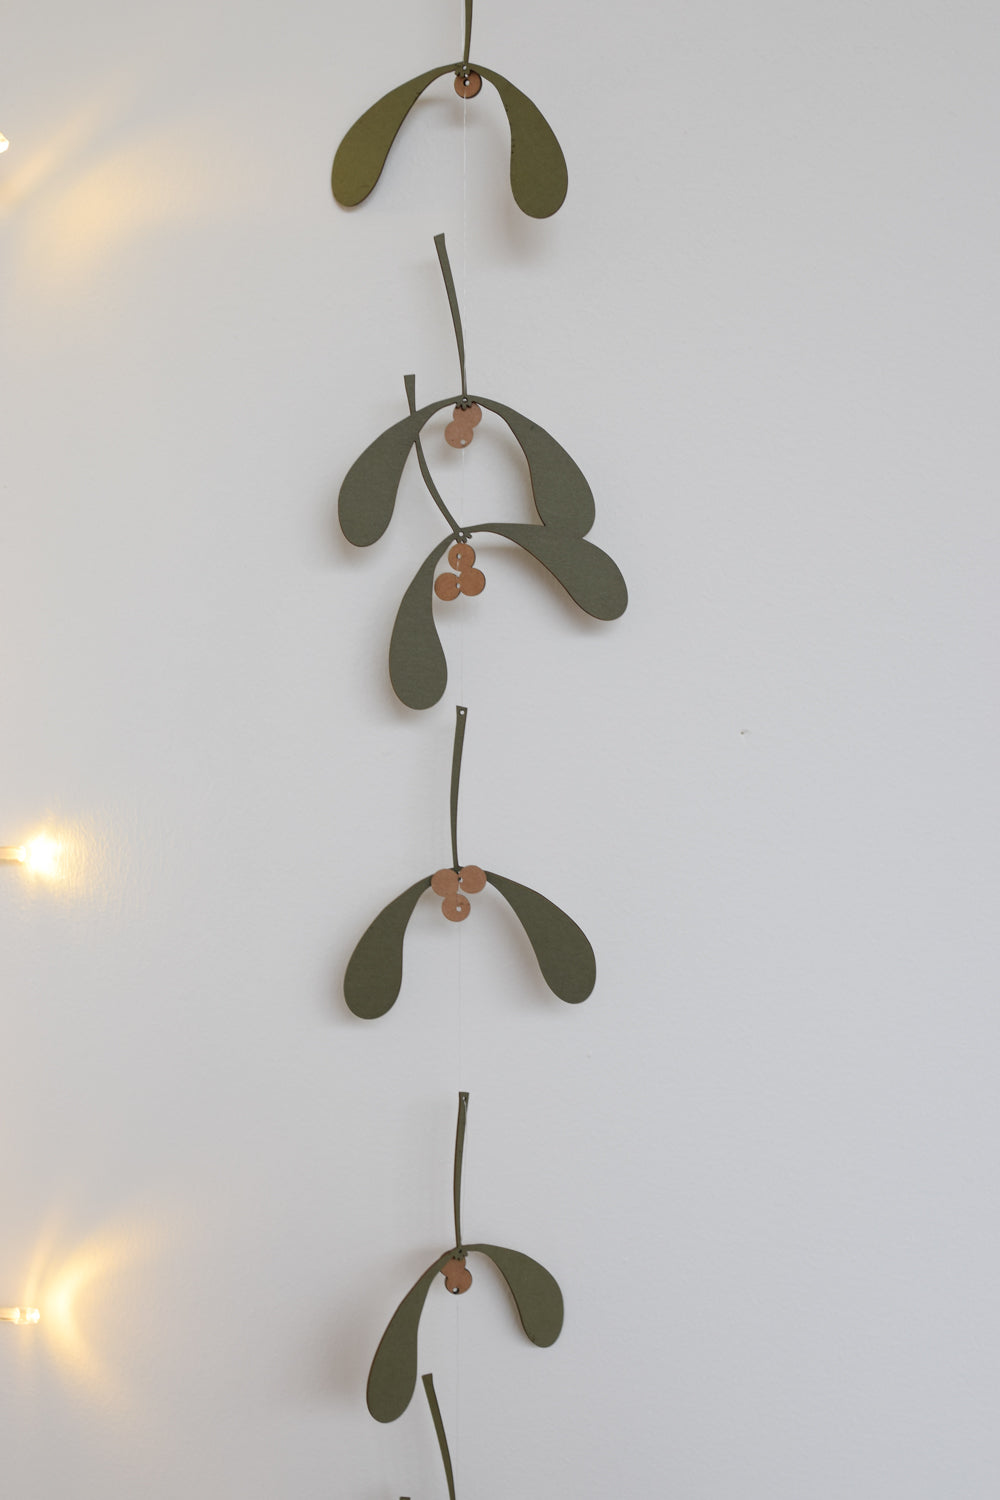 Winter treasures: Mistletoe